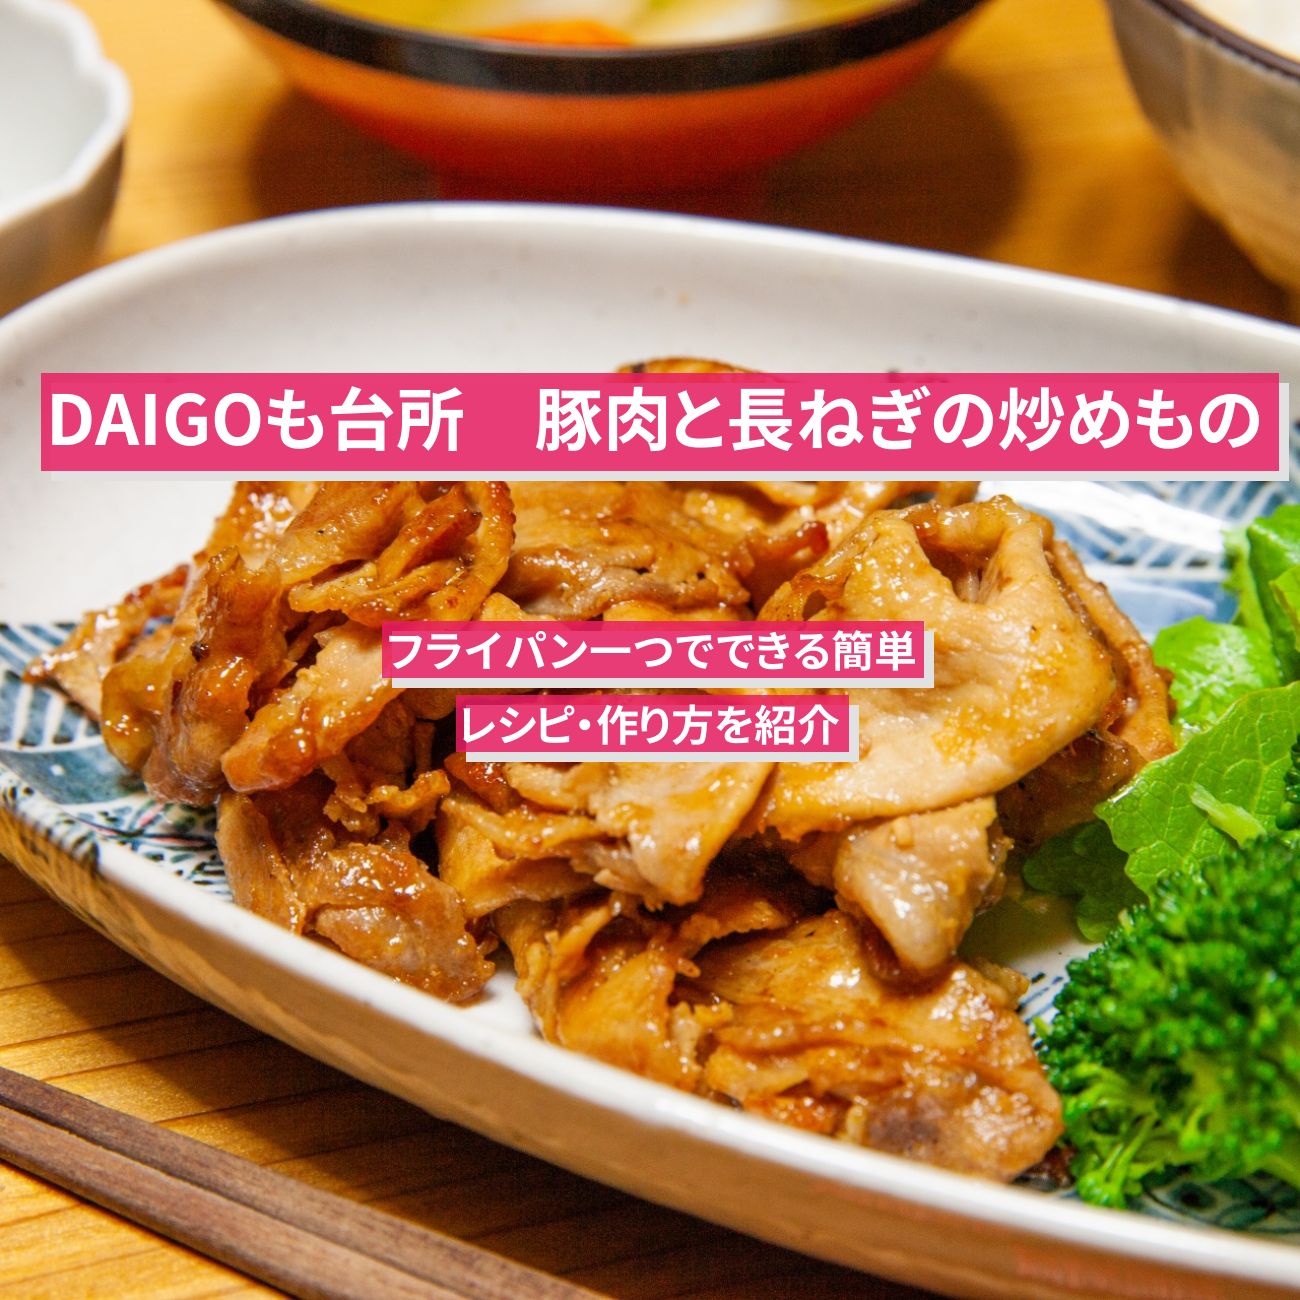 【DAIGOも台所】『豚肉と長ねぎの炒めもの』のレシピ・作り方を紹介